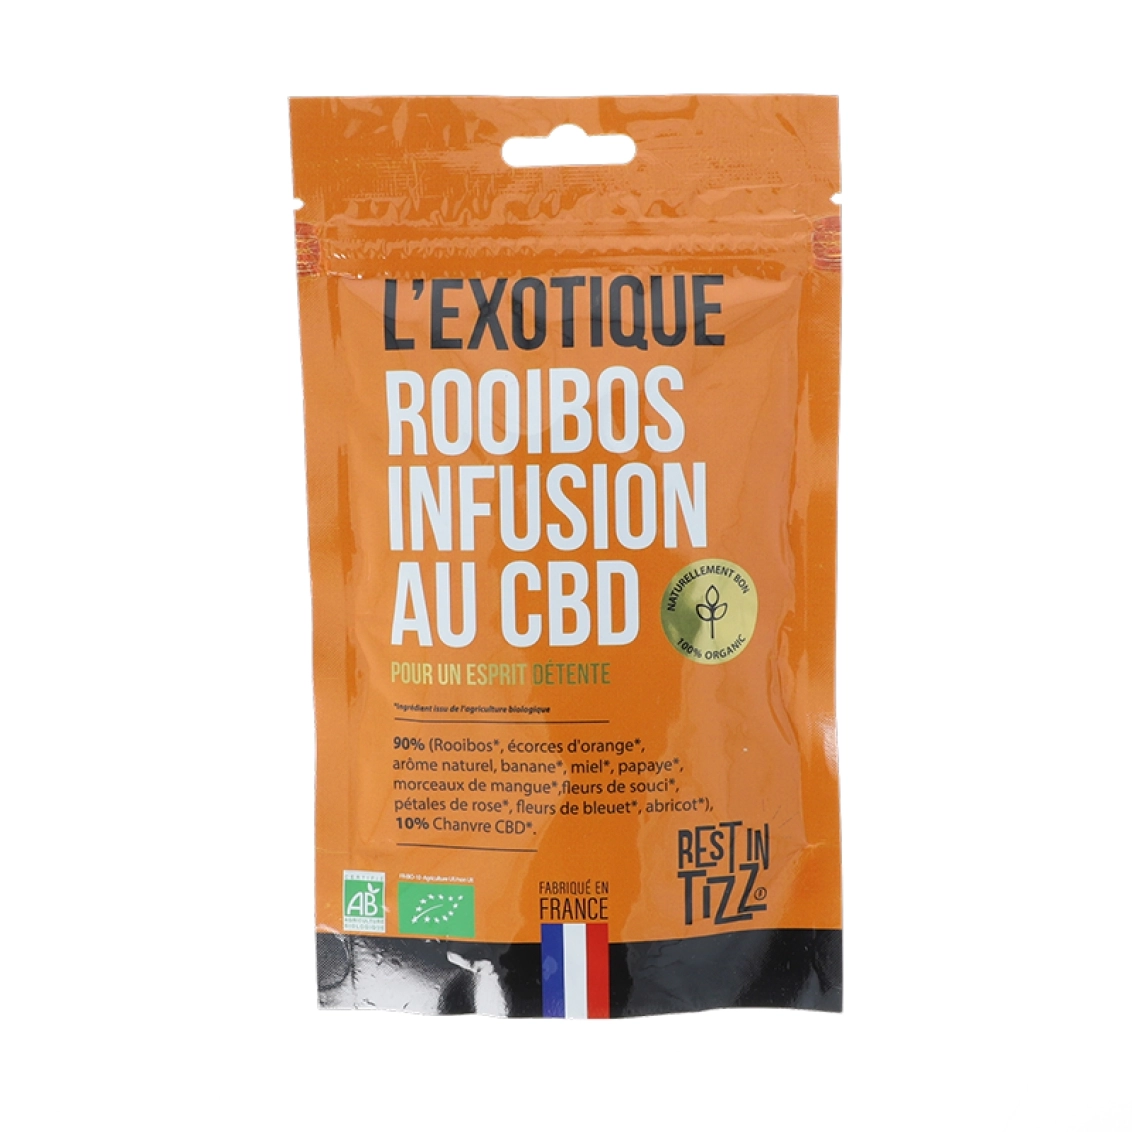 infusion-cbd-bio-rooibos-l-exotique-rest-in-tizz